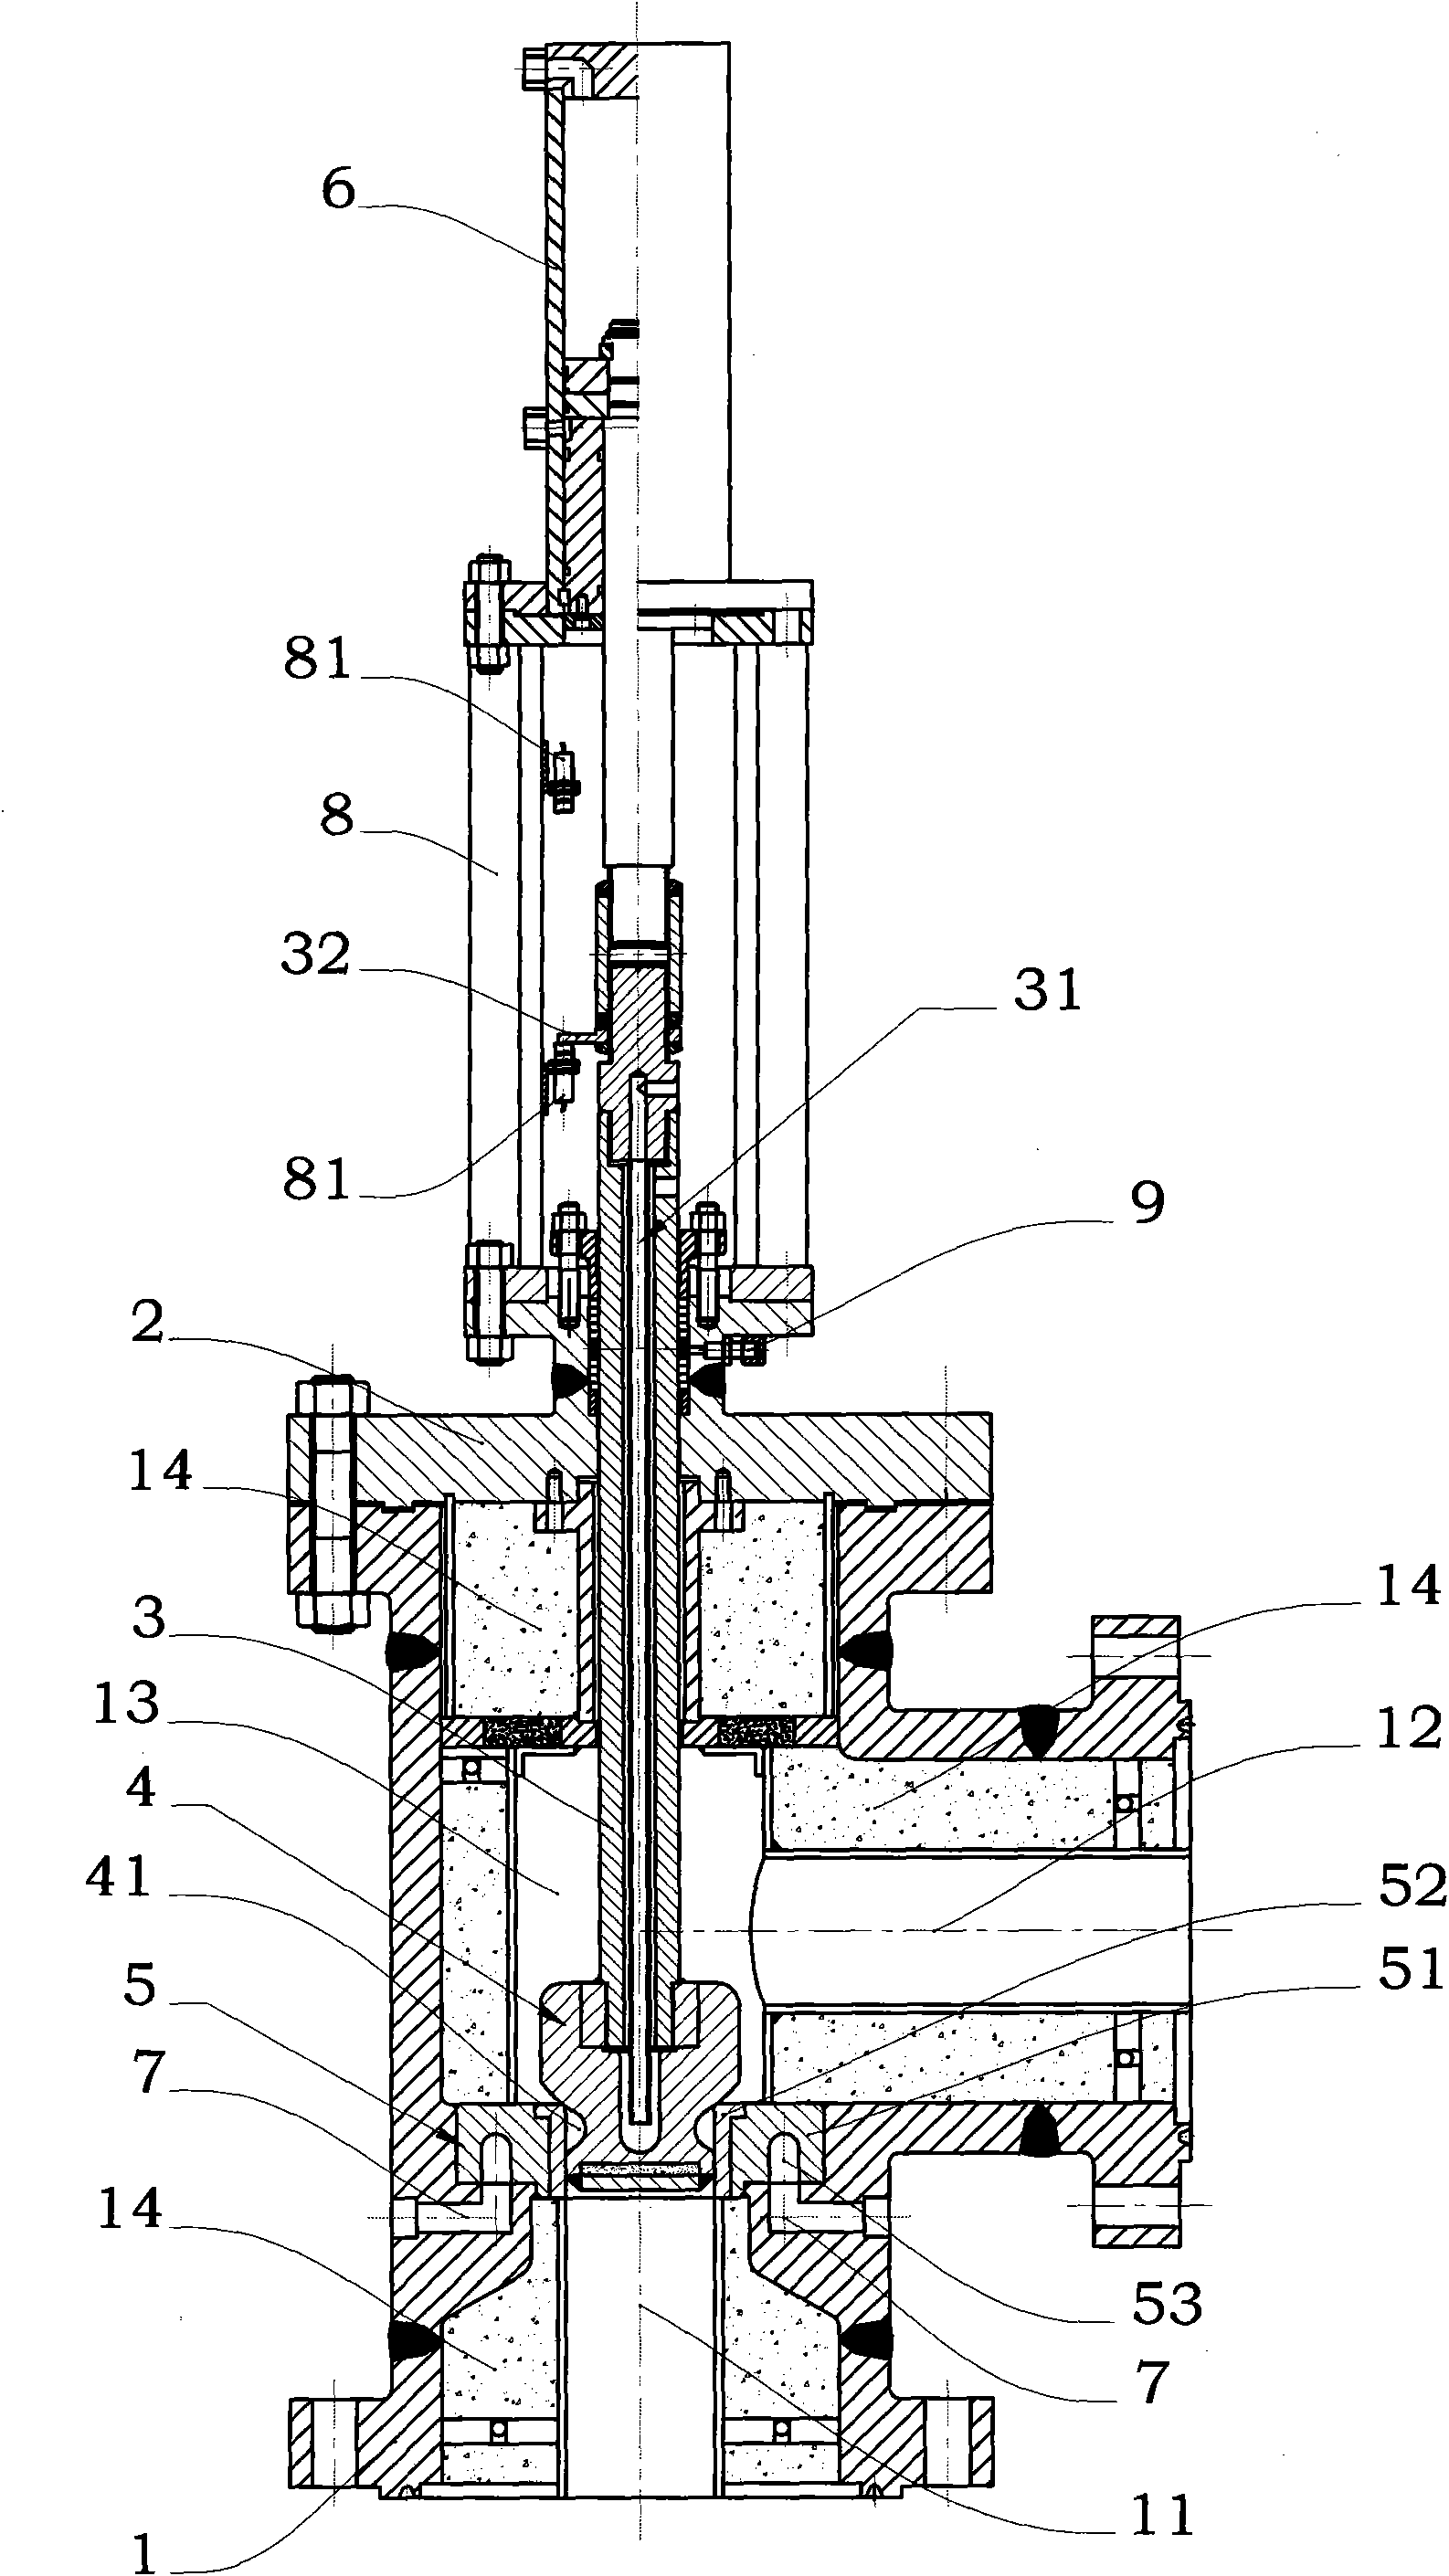 Ultra-temperature high-pressure stop valve